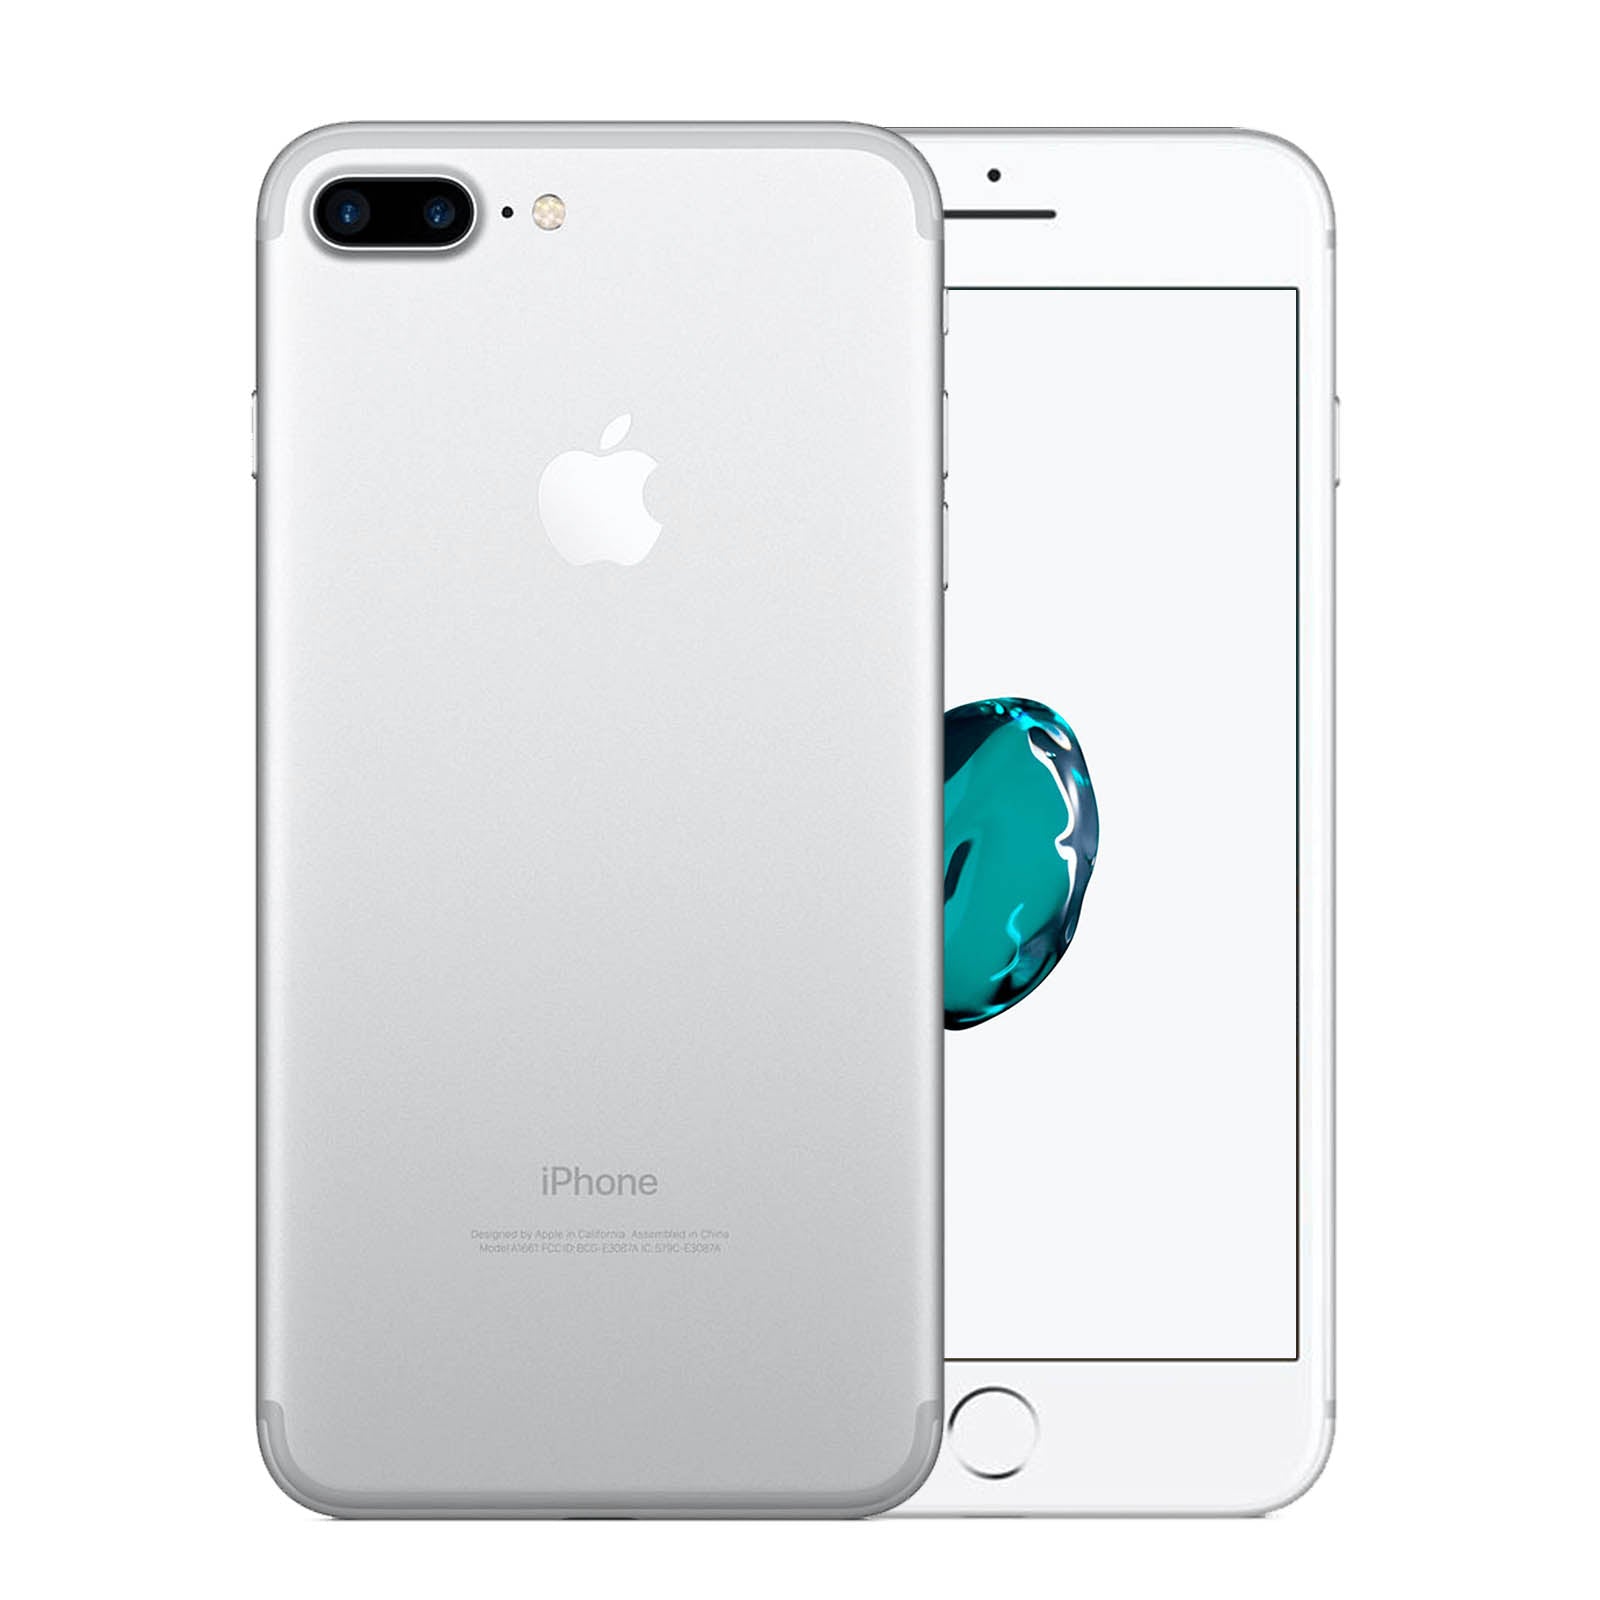 Apple iPhone 7 Plus 32GB Silver Unlocked - Excellent